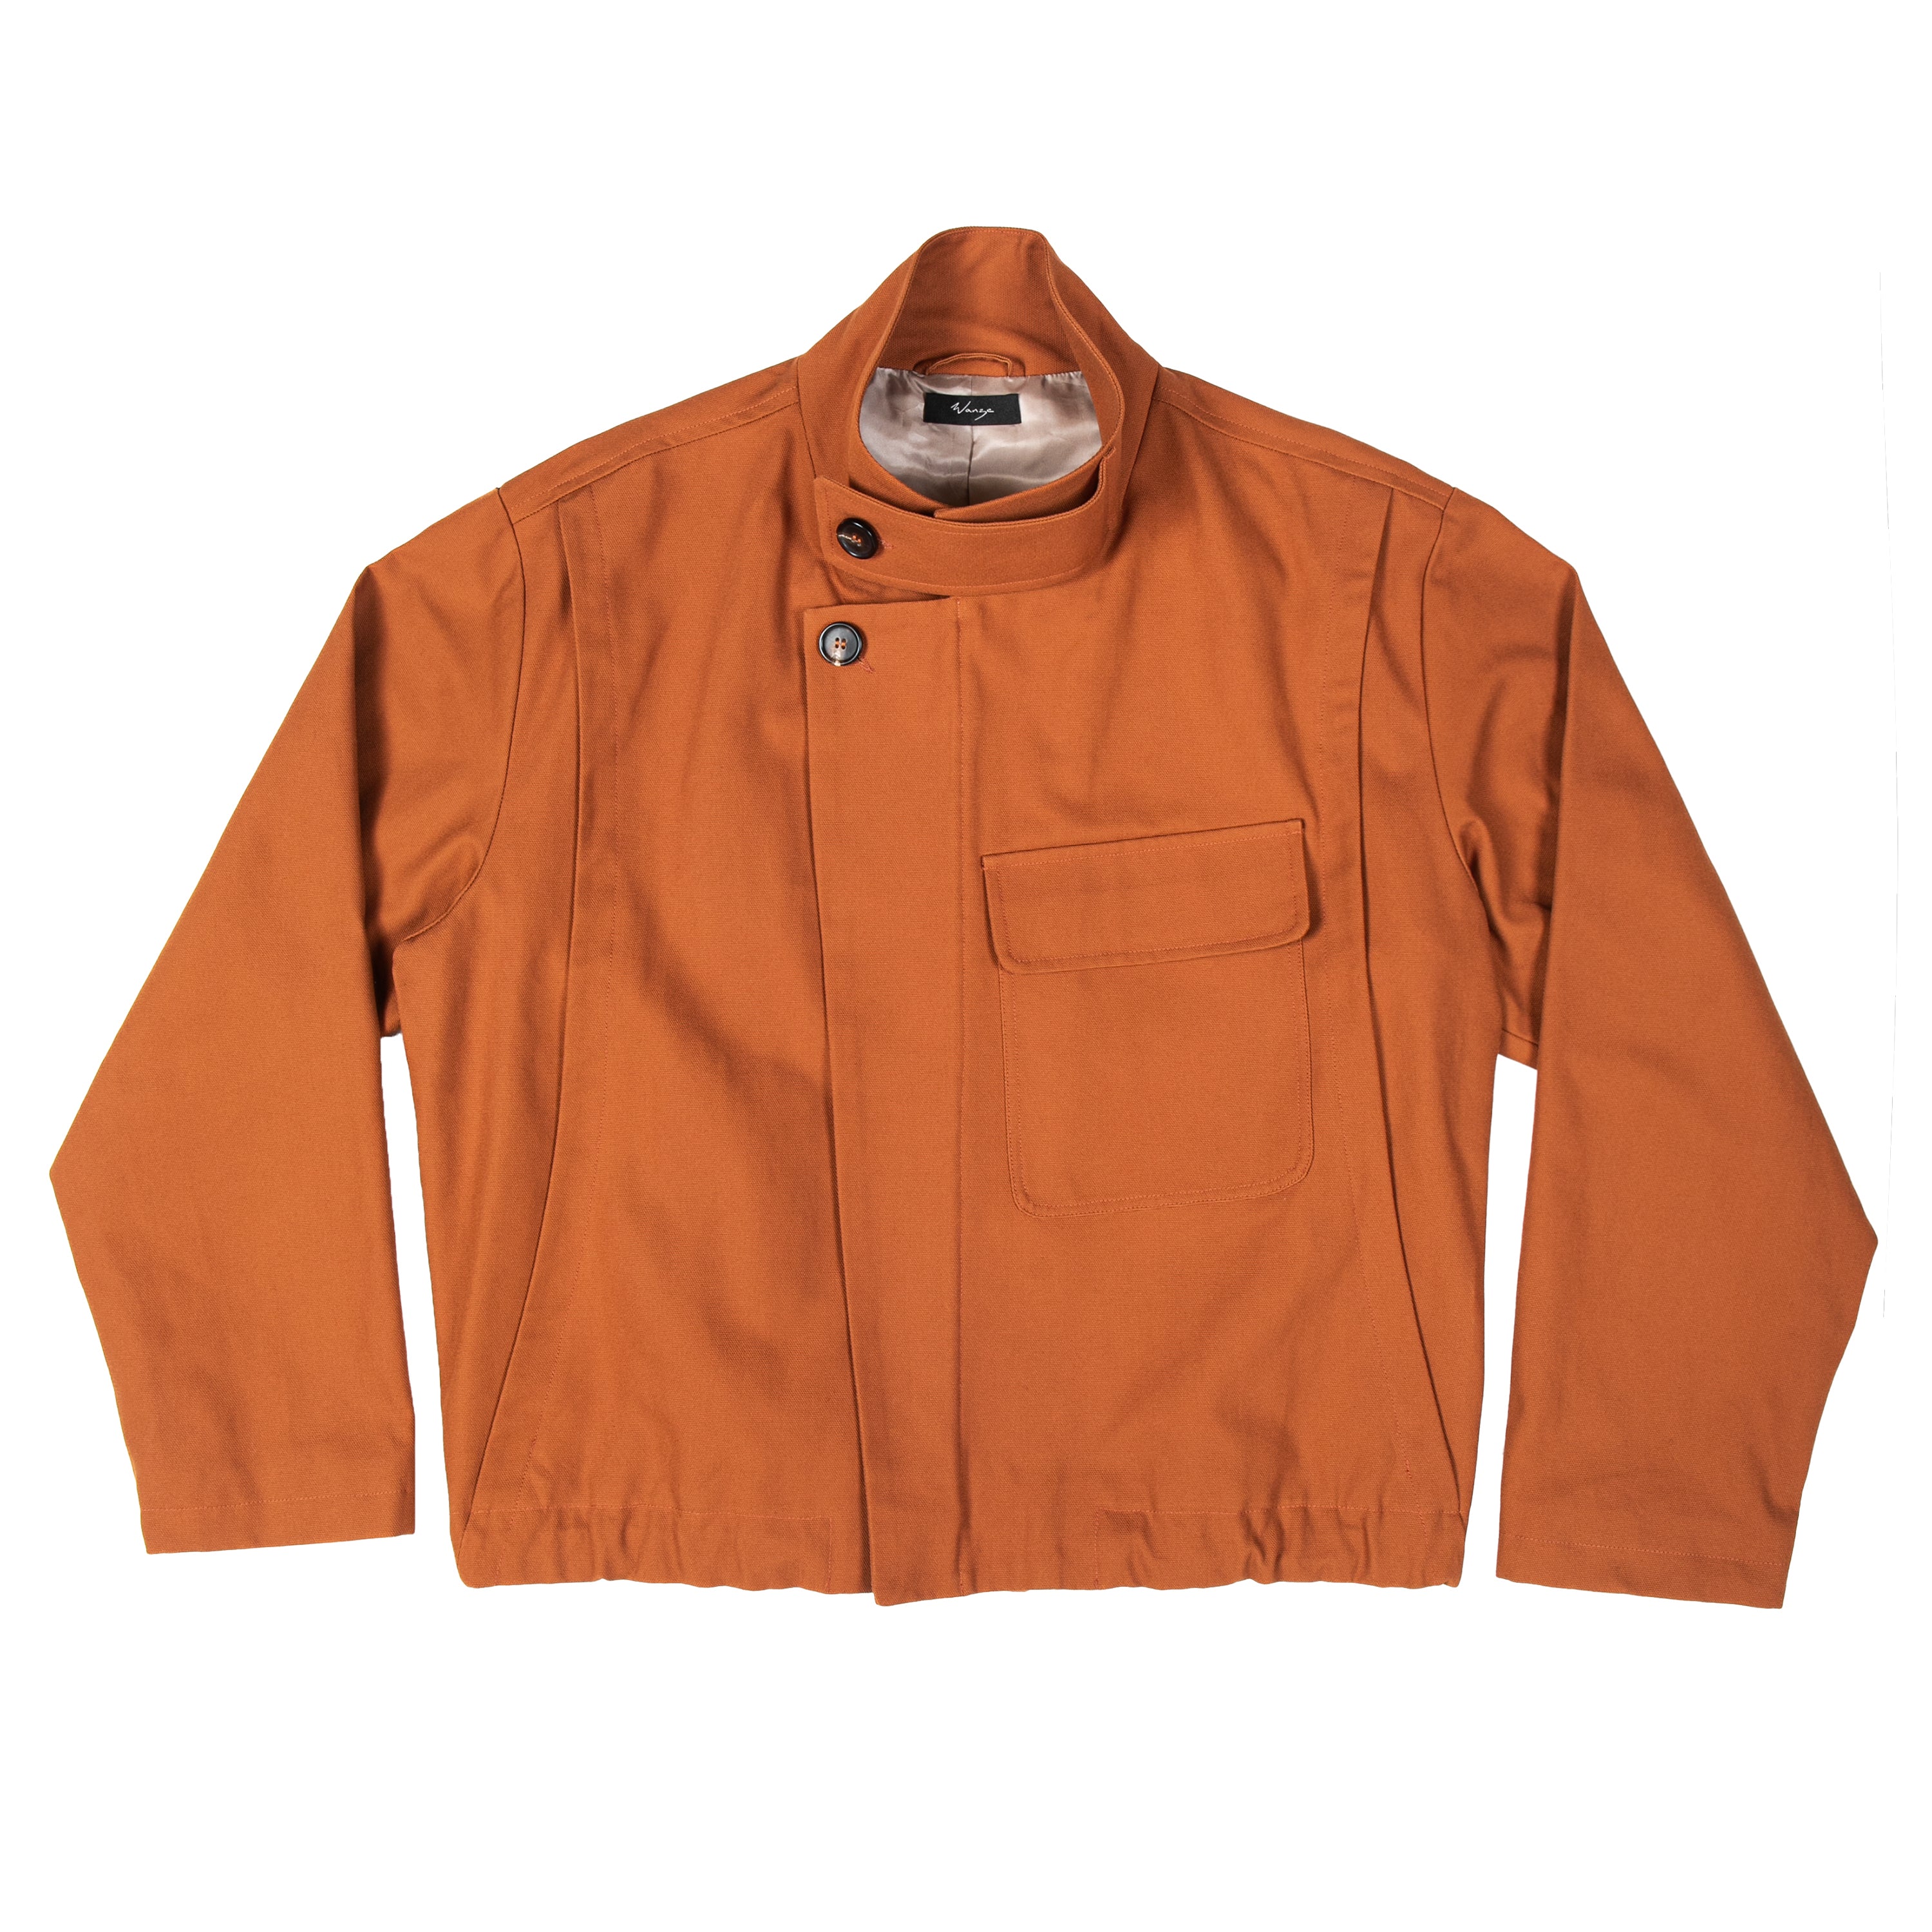 Dispatch Jacket Canvas Orange - PREORDER